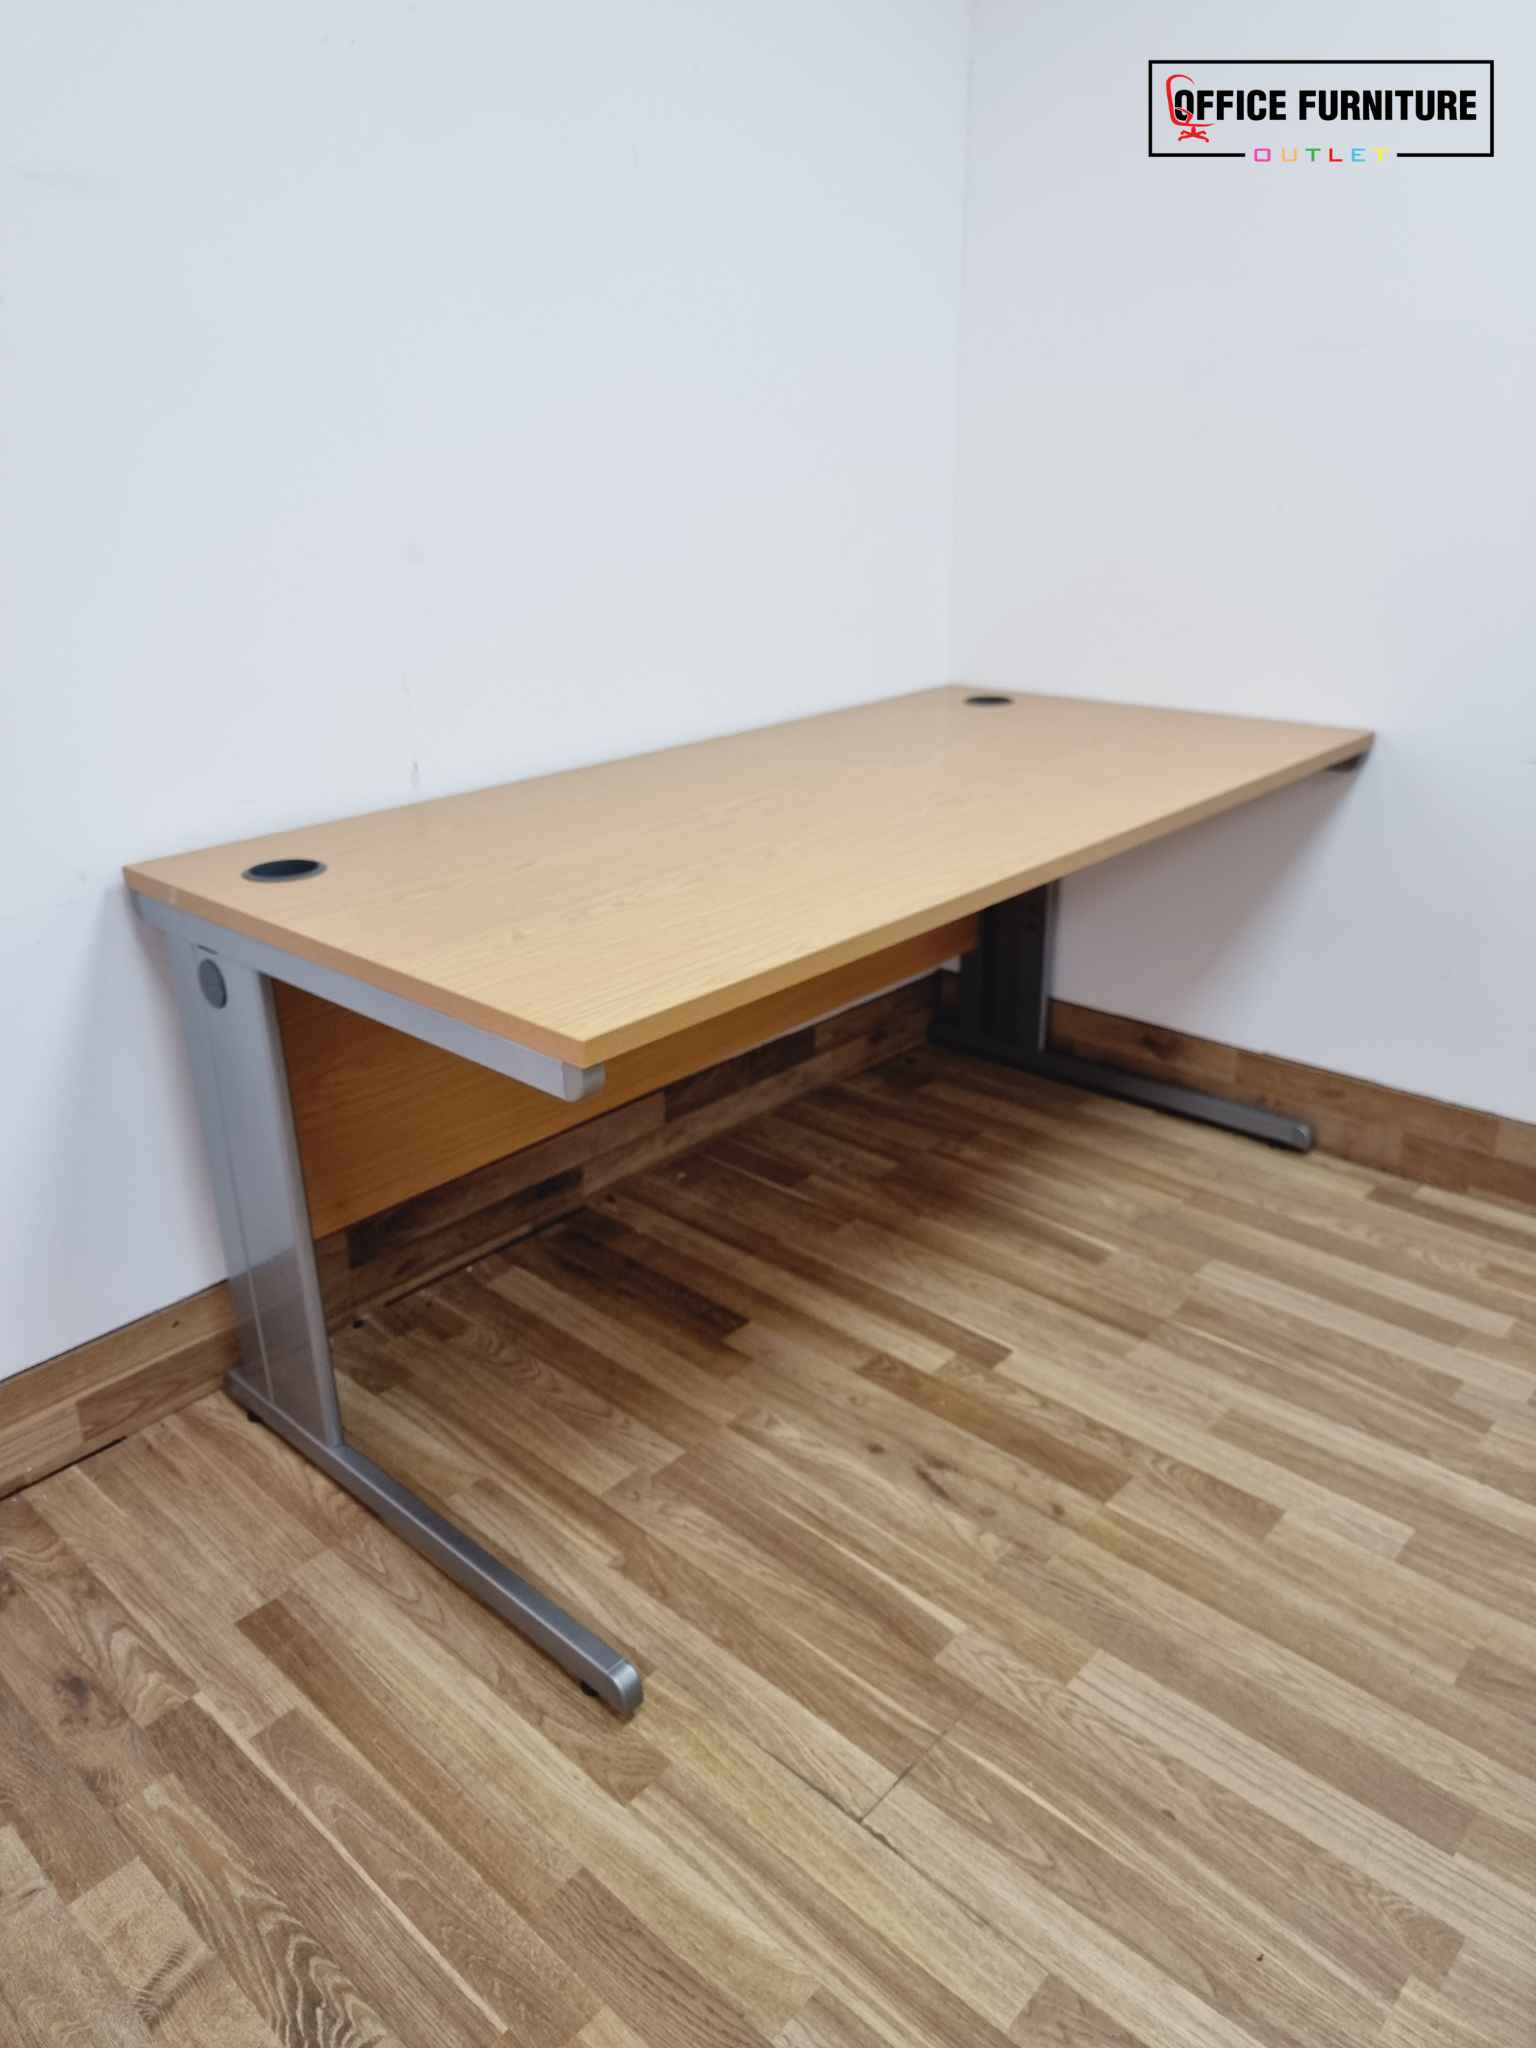 Sven Christiansen Straight Desk (160cm X 80cm)